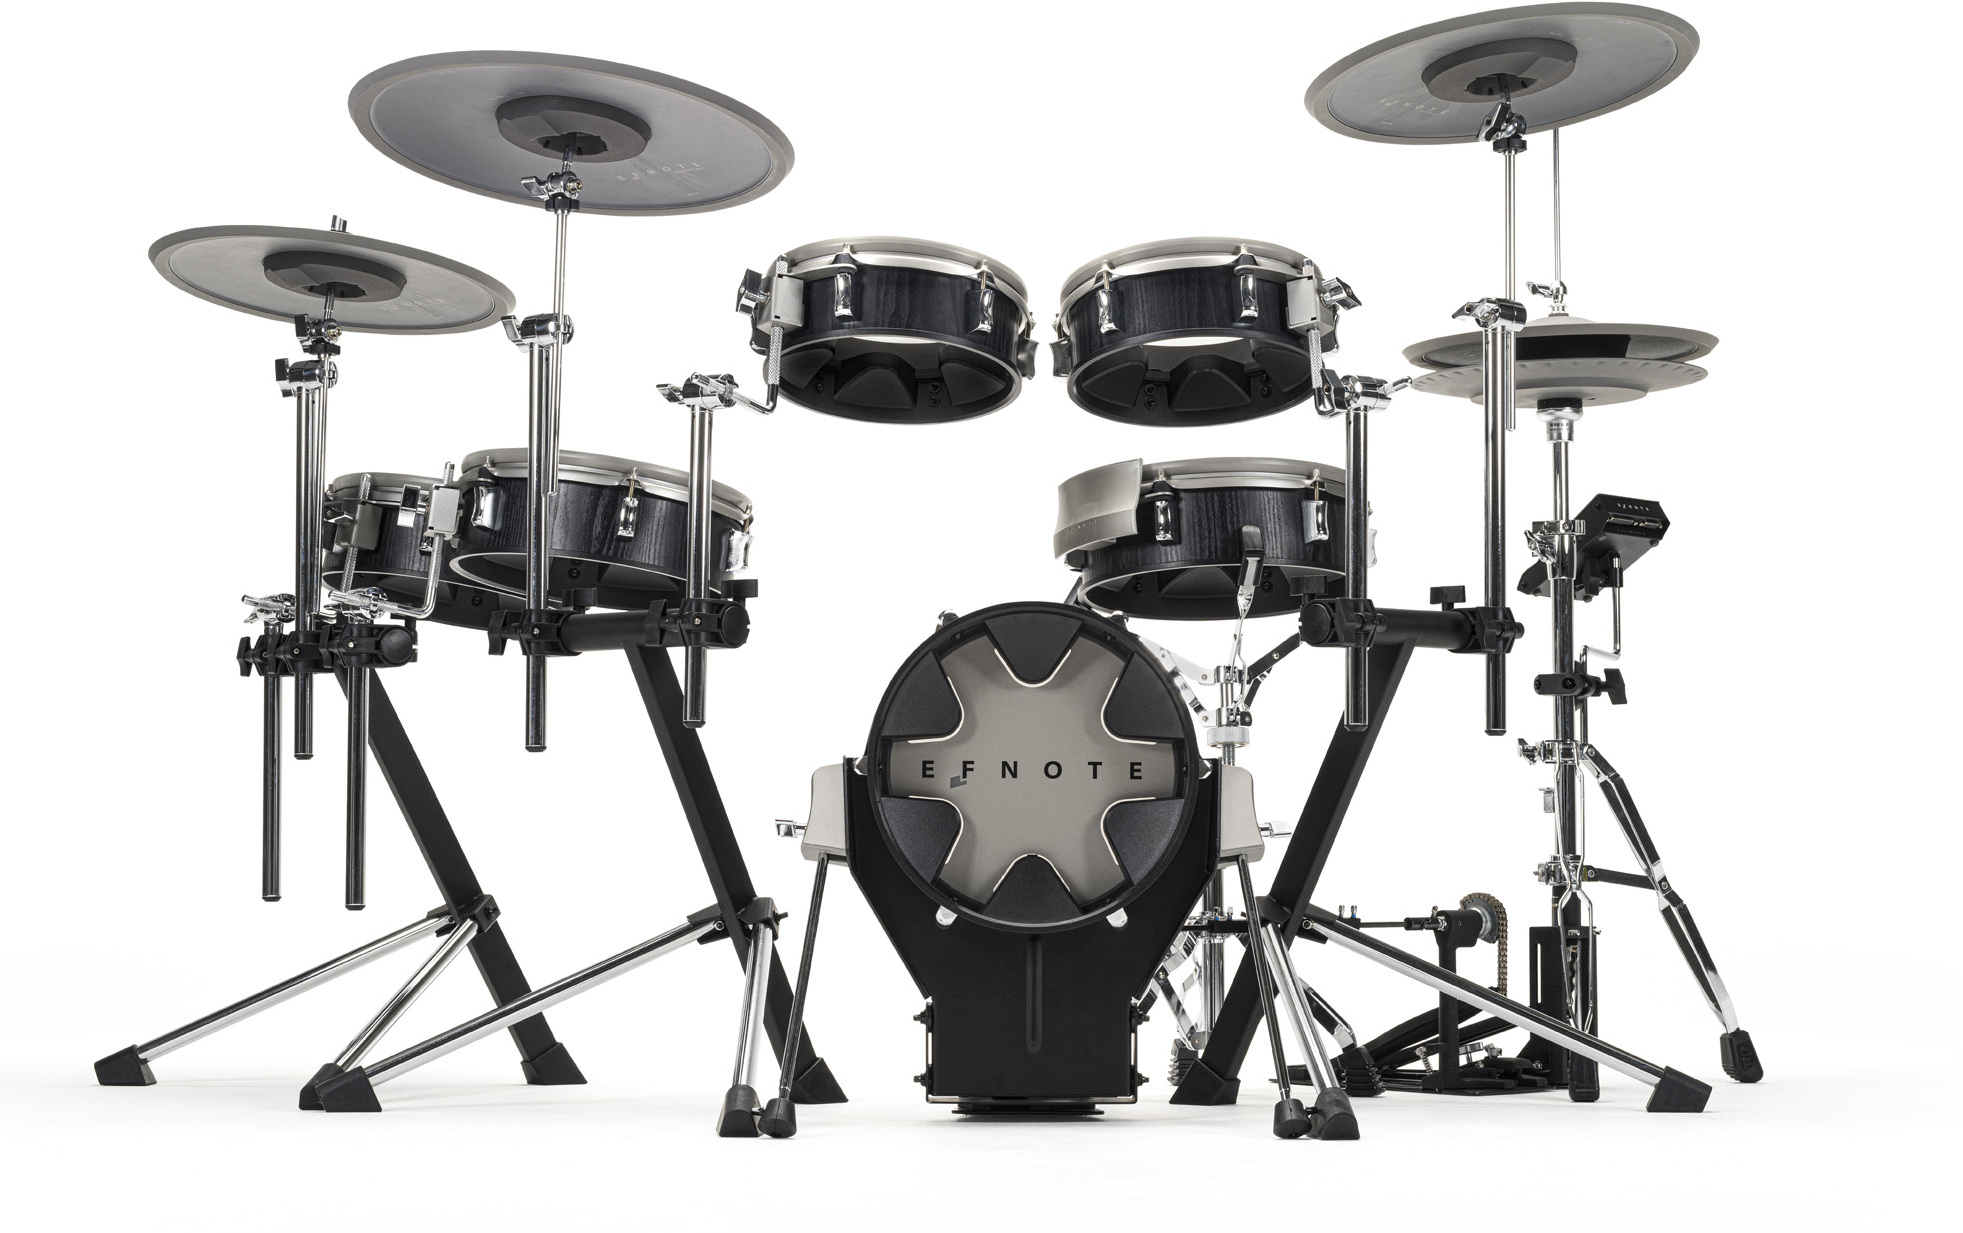 Efnote Efd3x Drum Kit - Electronic drum kit & set - Main picture